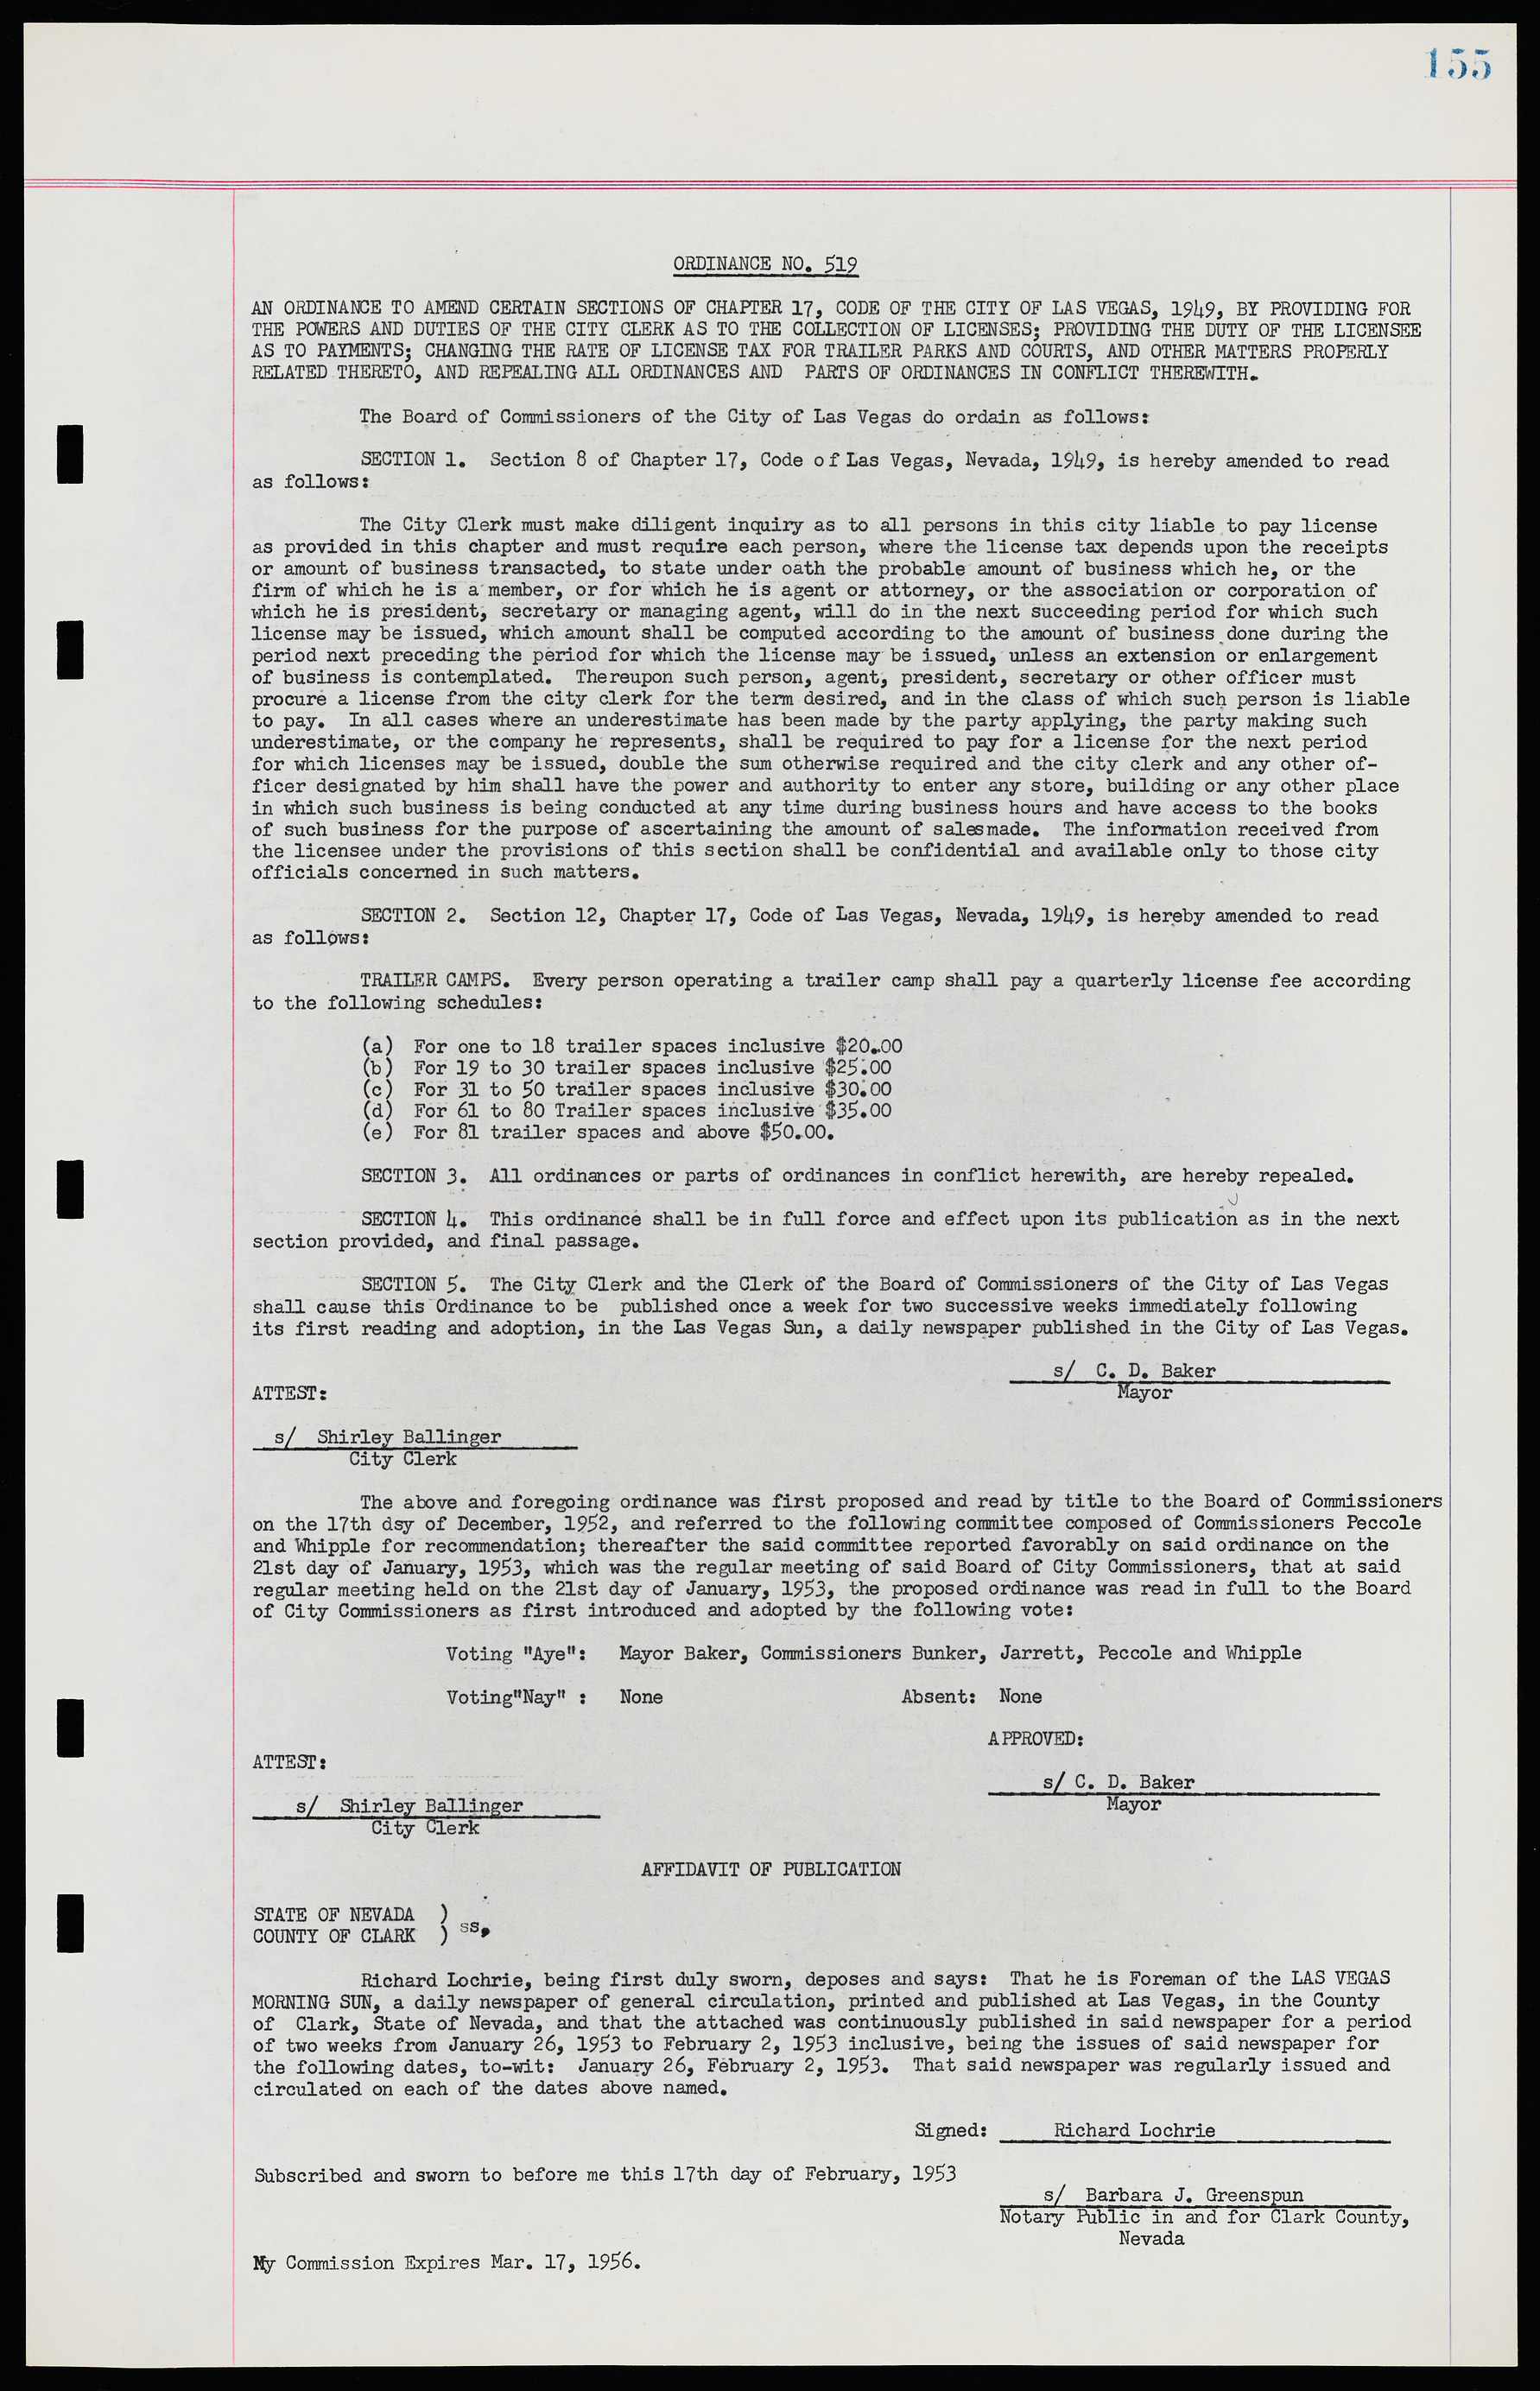 Las Vegas City Ordinances, November 13, 1950 to August 6, 1958, lvc000015-163